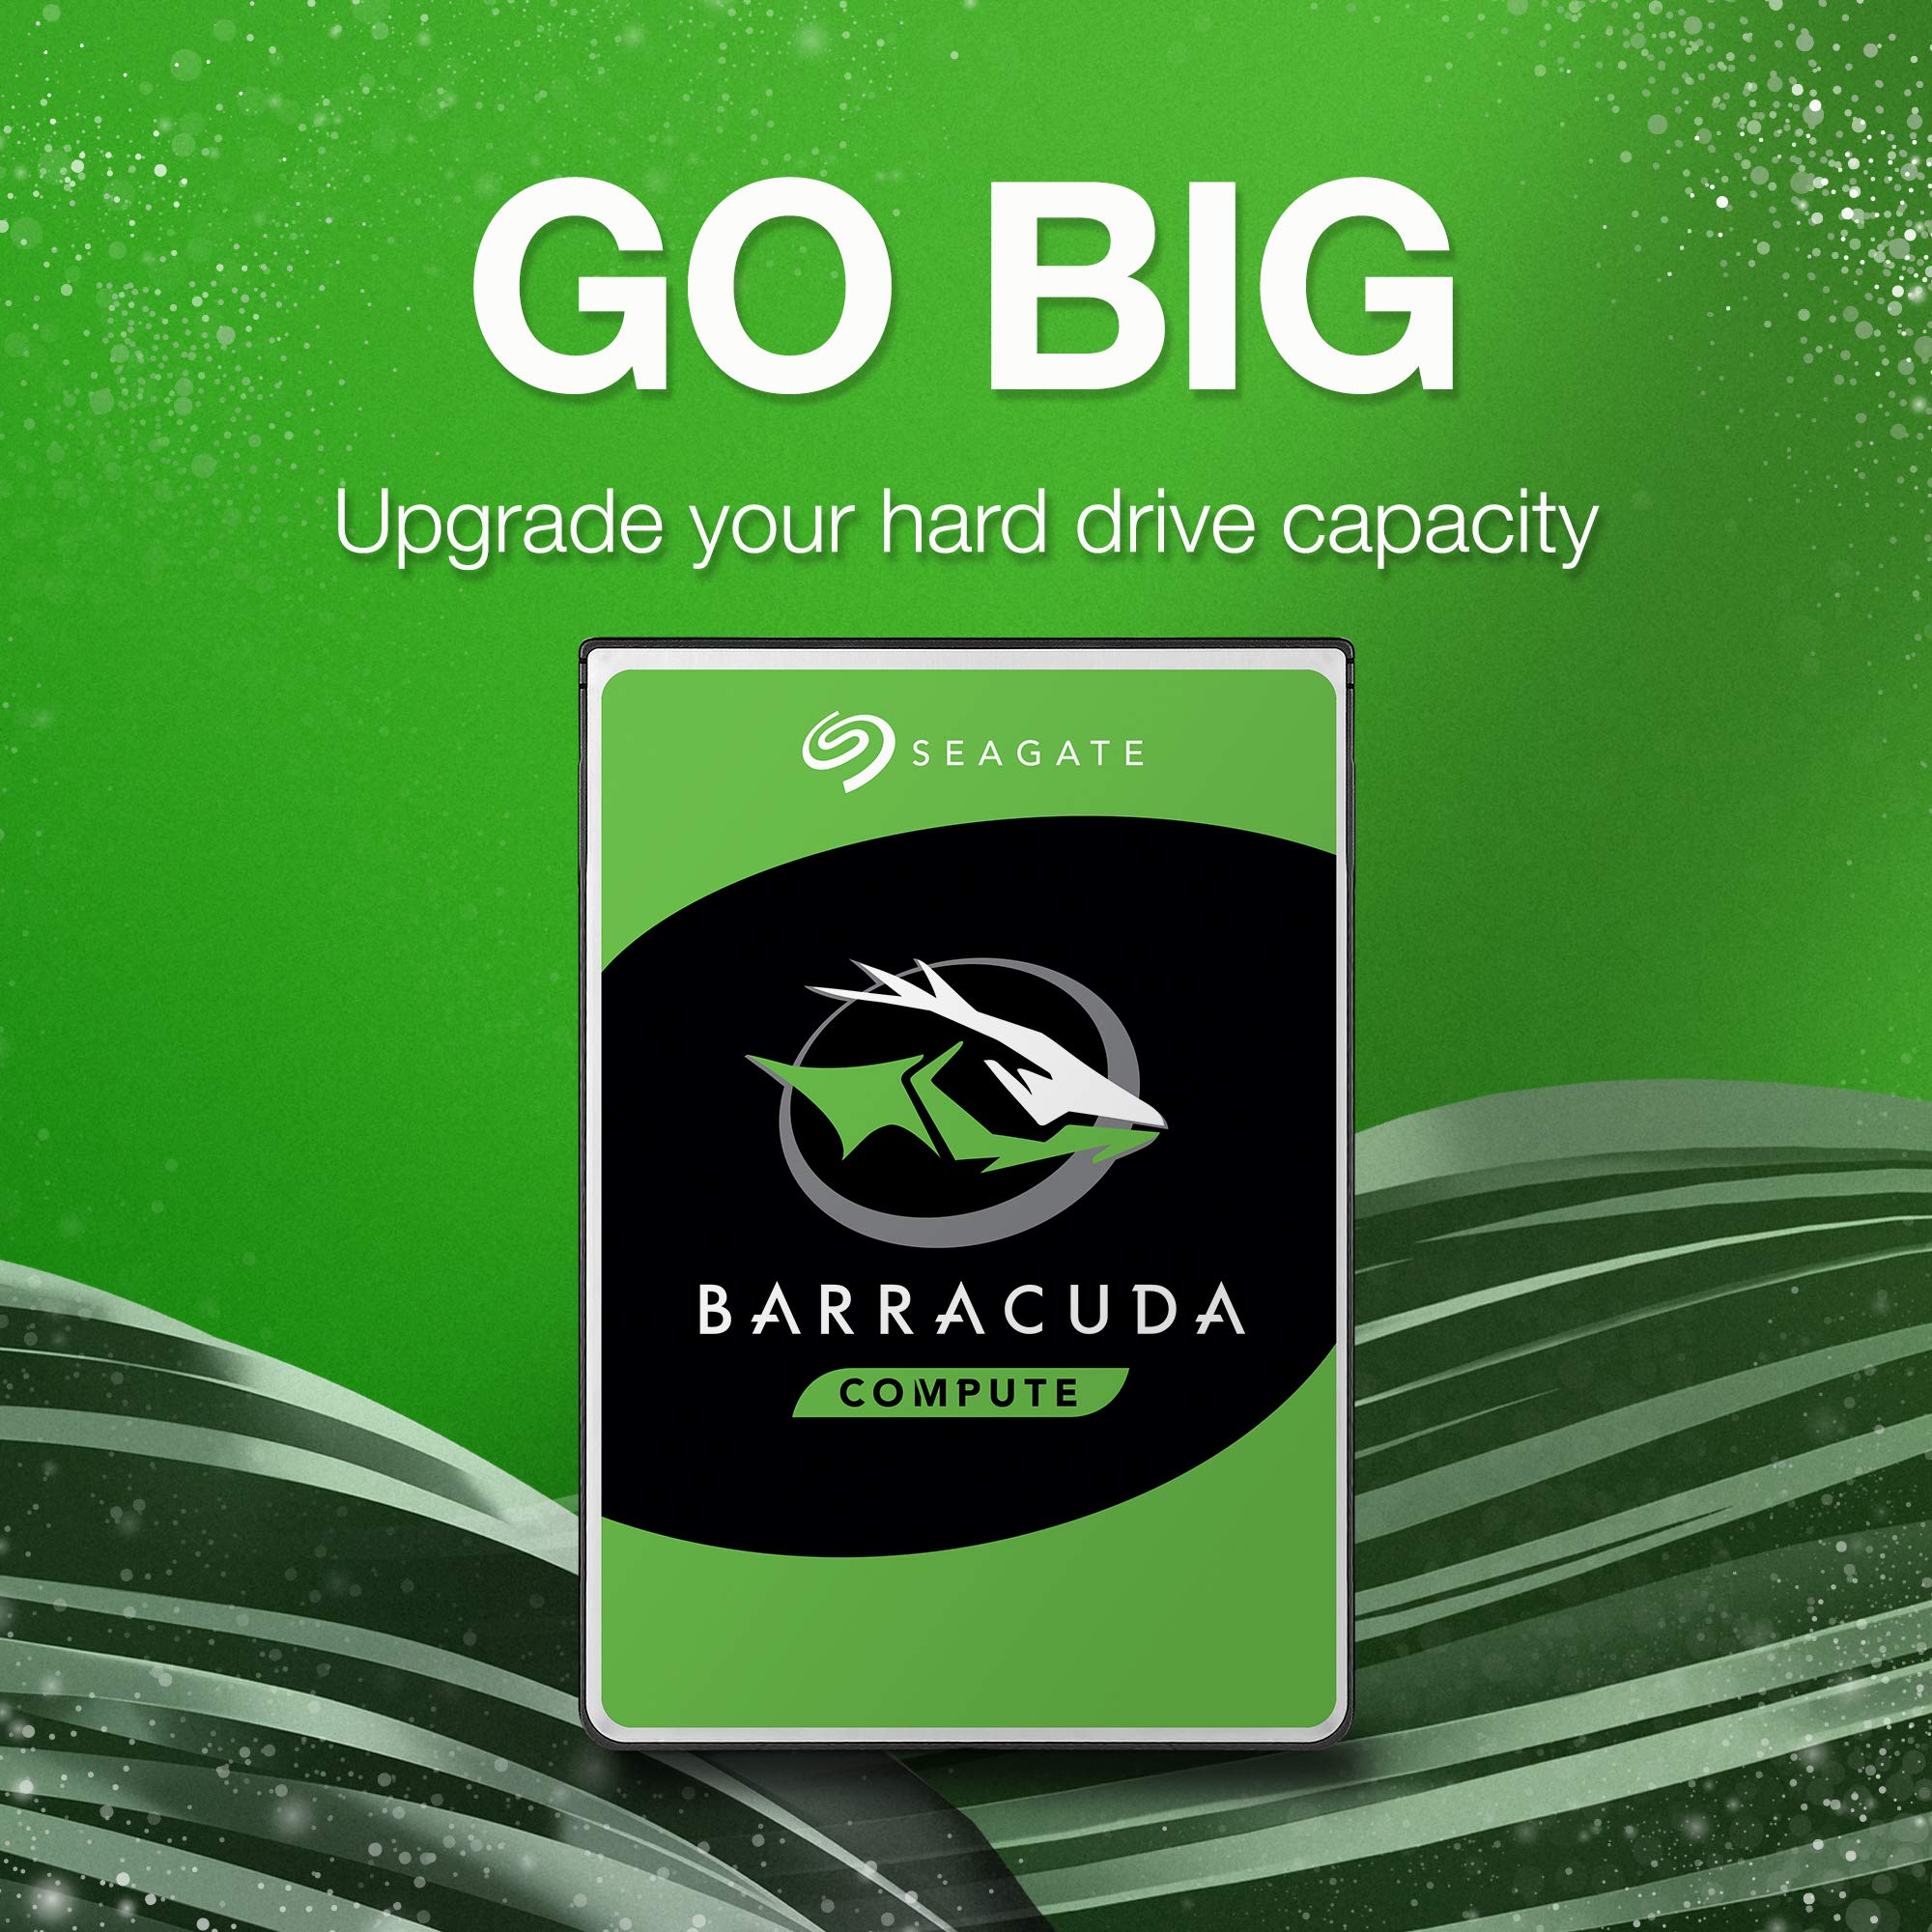 Seagate BarraCuda 1TB Internal Hard Drive HDD – 3.5 Inch SATA 6 Gb/s 7200 RPM 64MB Cache for Computer Desktop PC (ST1000DM010)